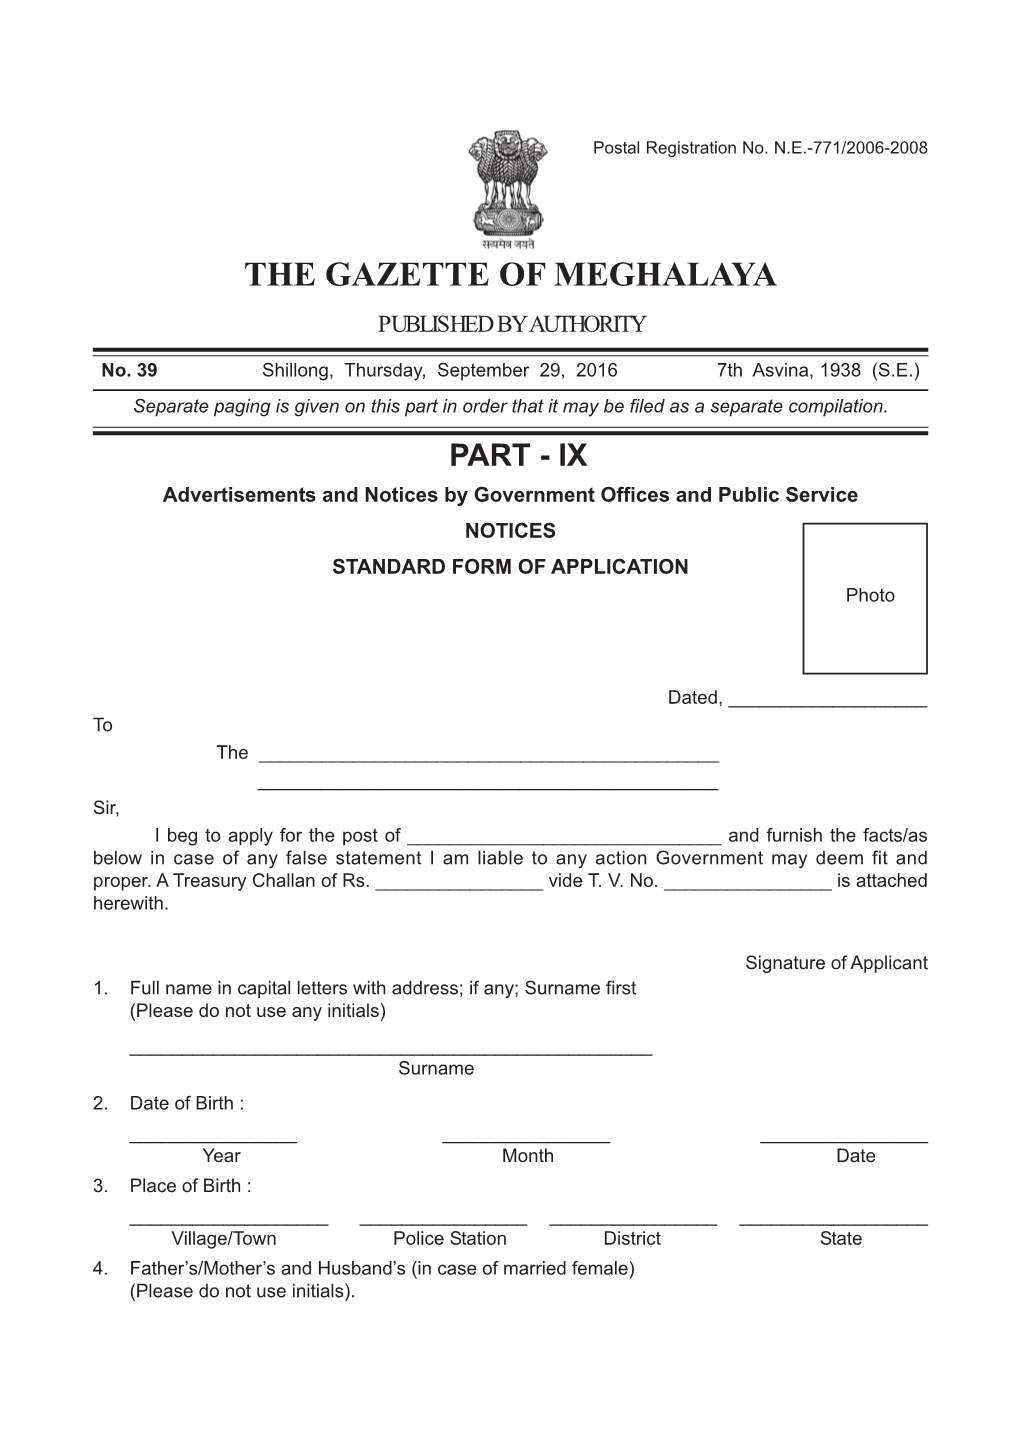 The Gazette of Meghalaya Published by Authority